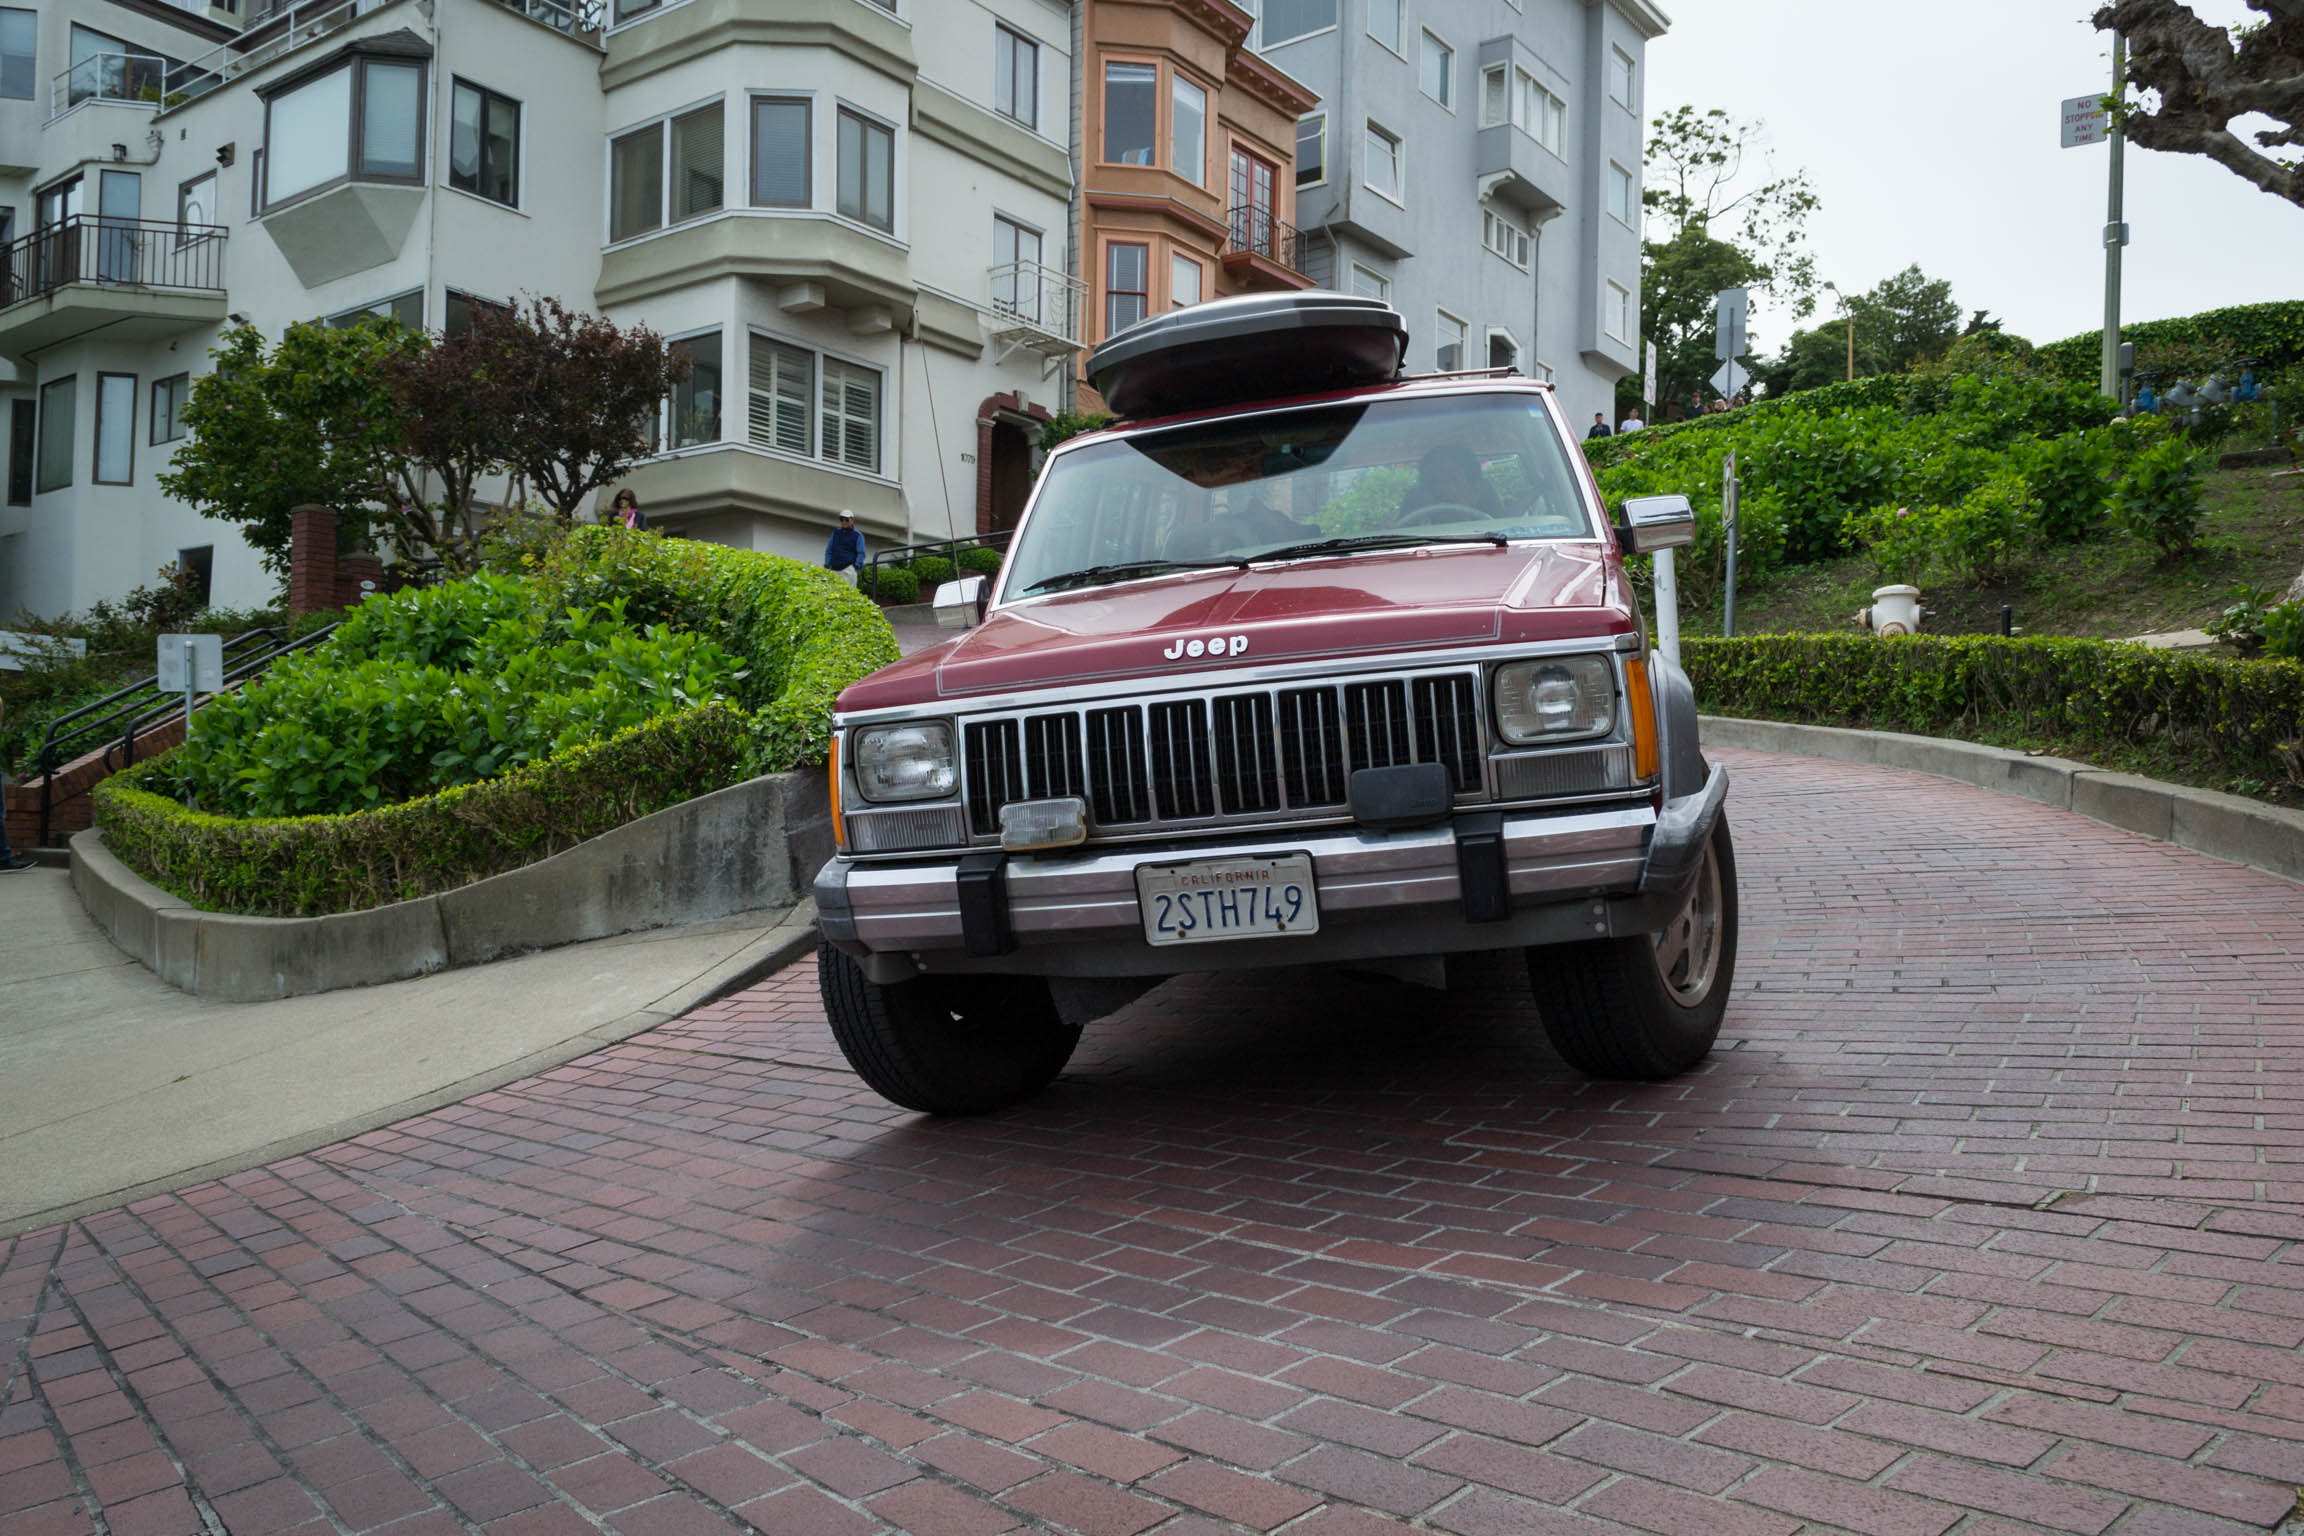 Les voitures serpentent Lombard Street